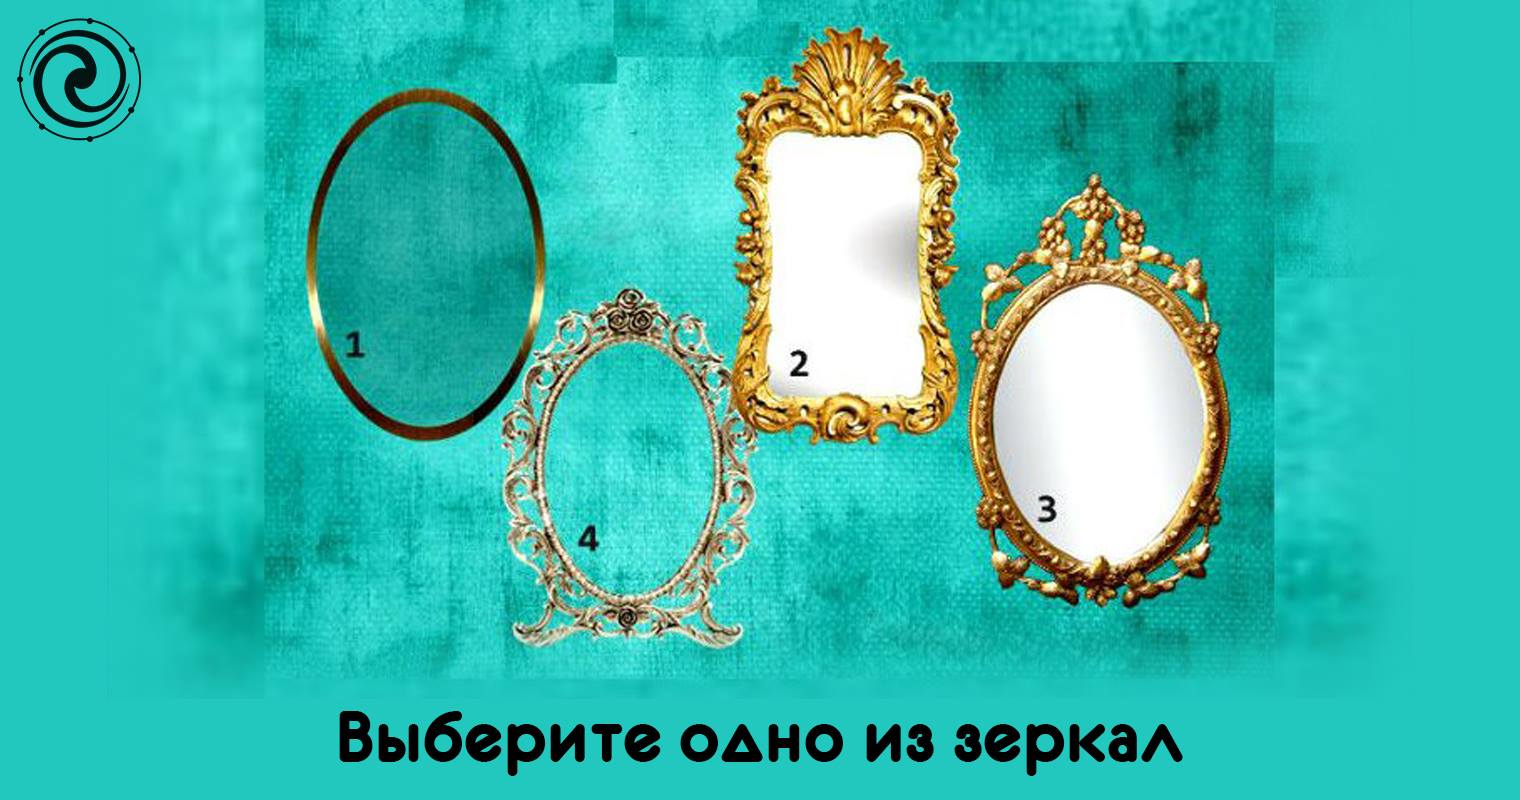 Часы и зеркало тест. Зеркало с секретом. Зеркала - загадки и тайны. Тест с зеркалом. Тест выбери зеркало.